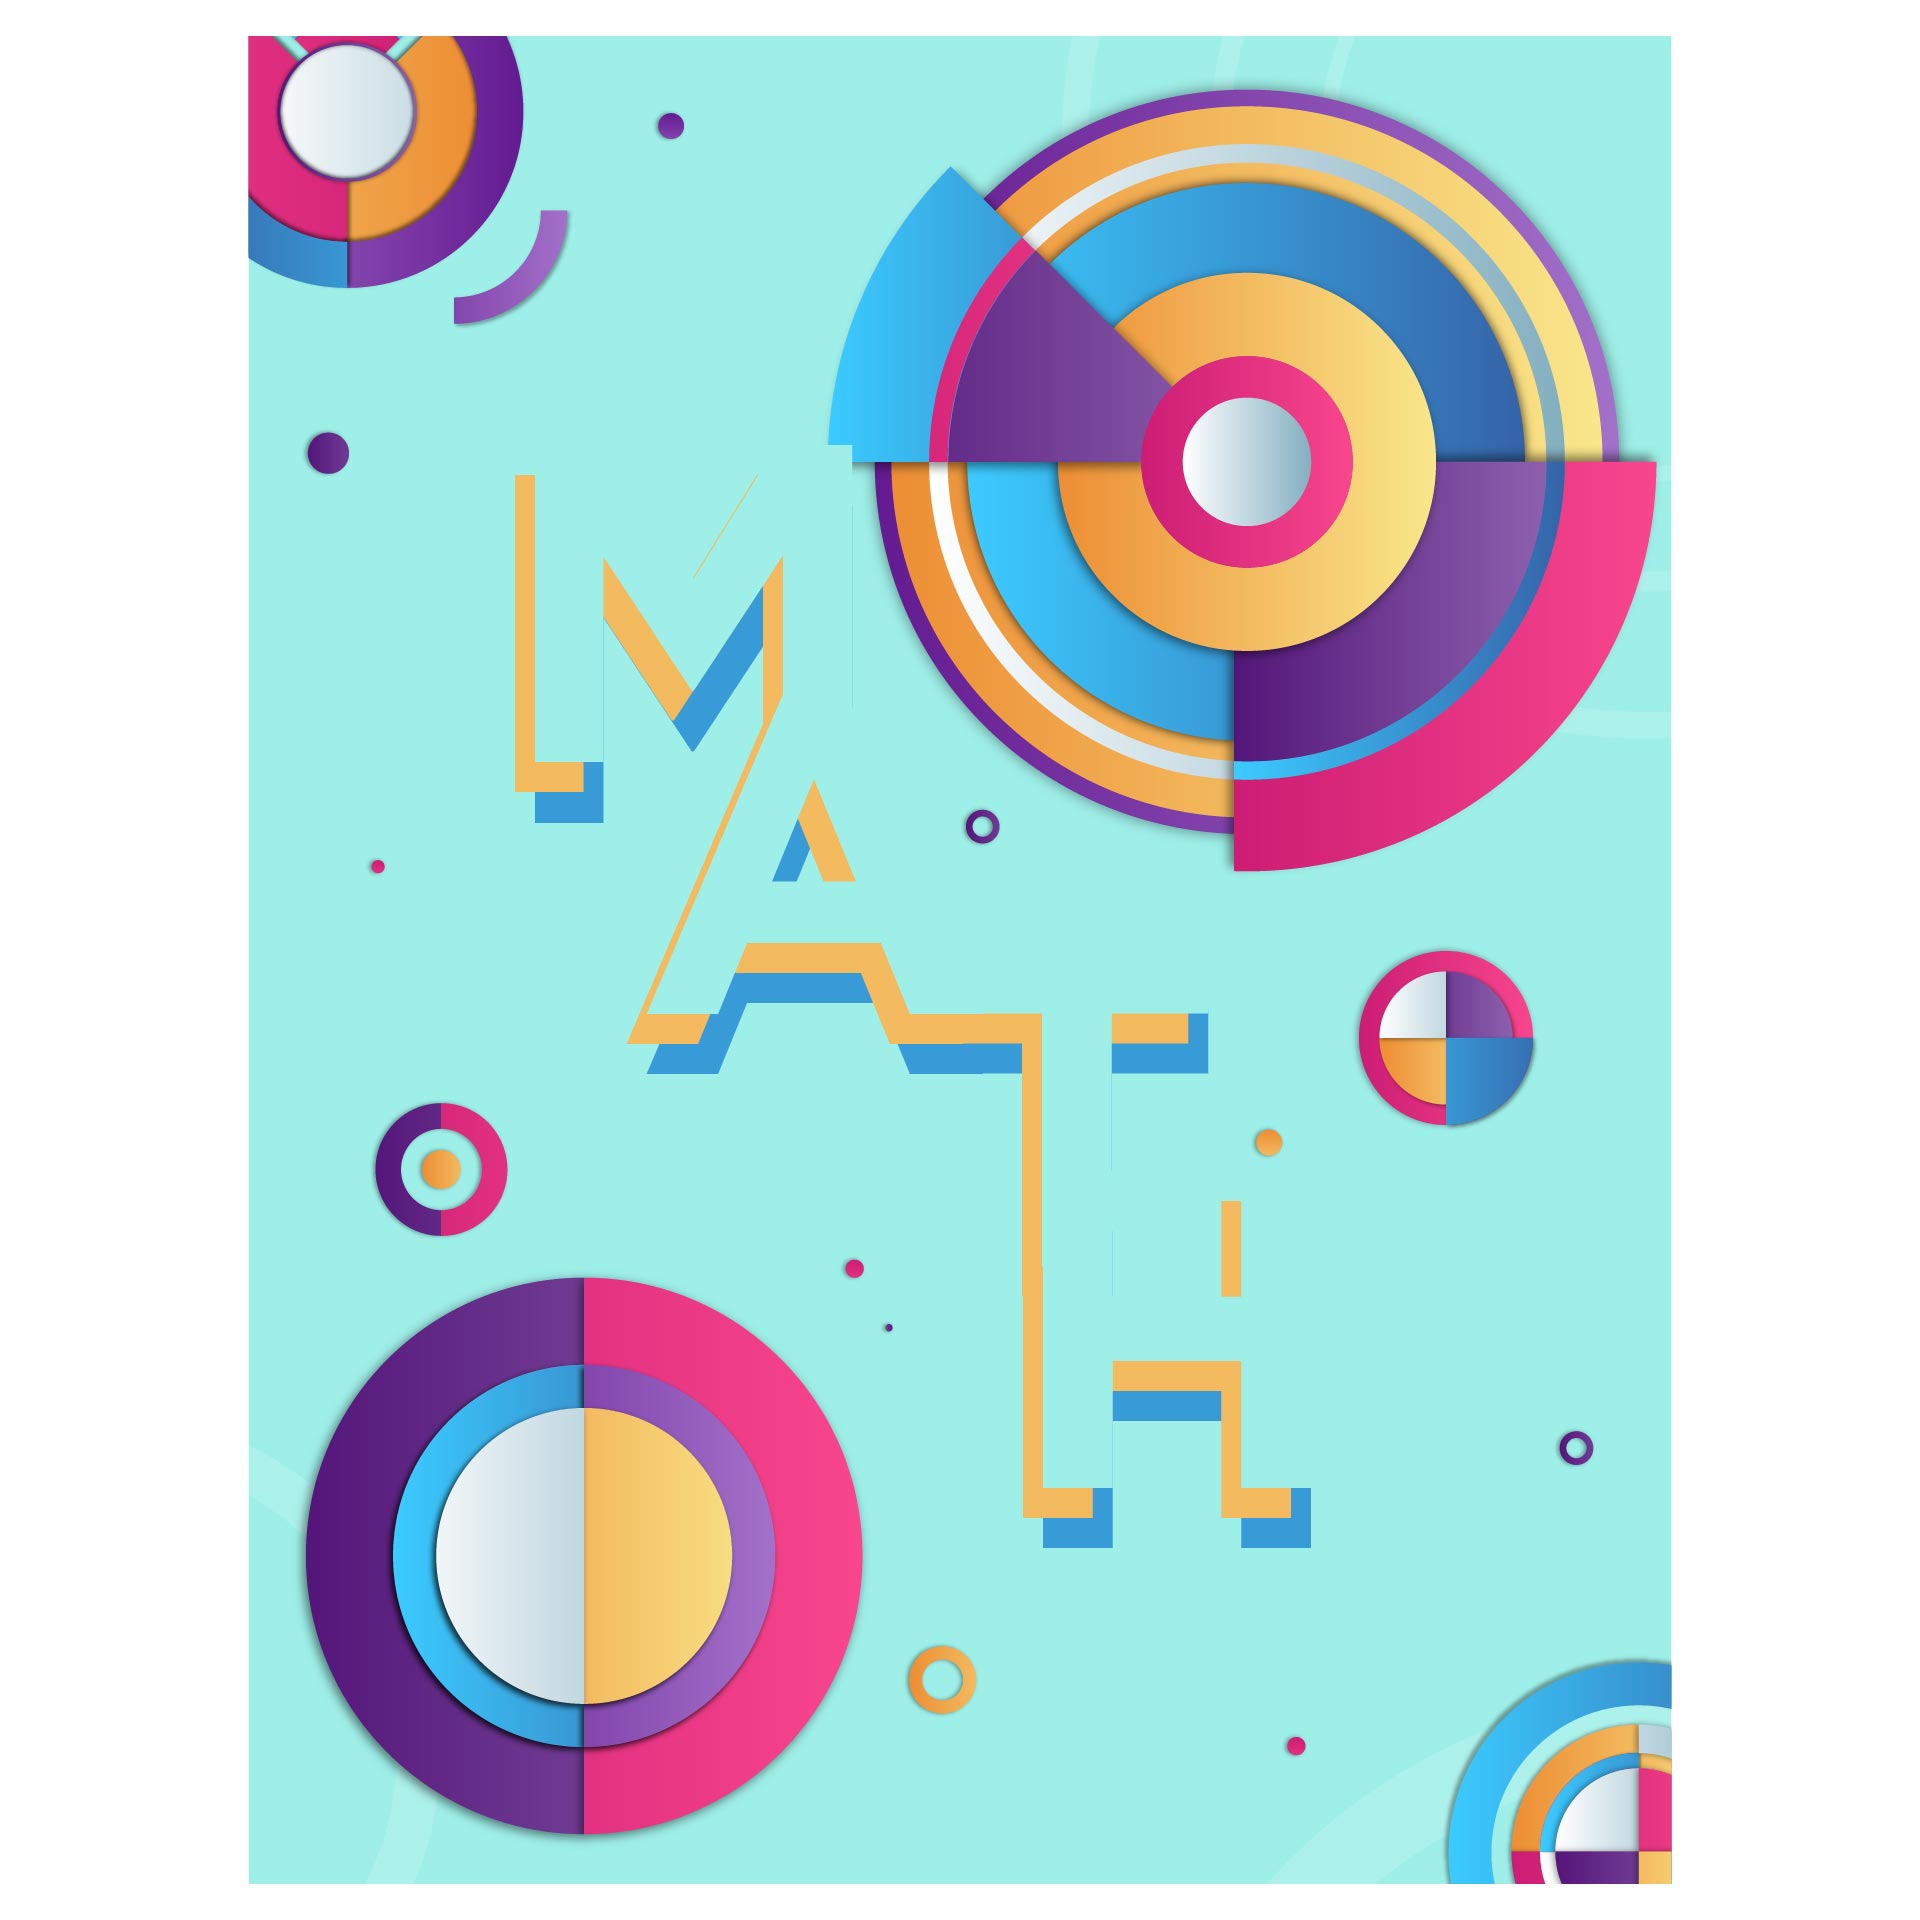 10 Best Math Binder Cover Printable